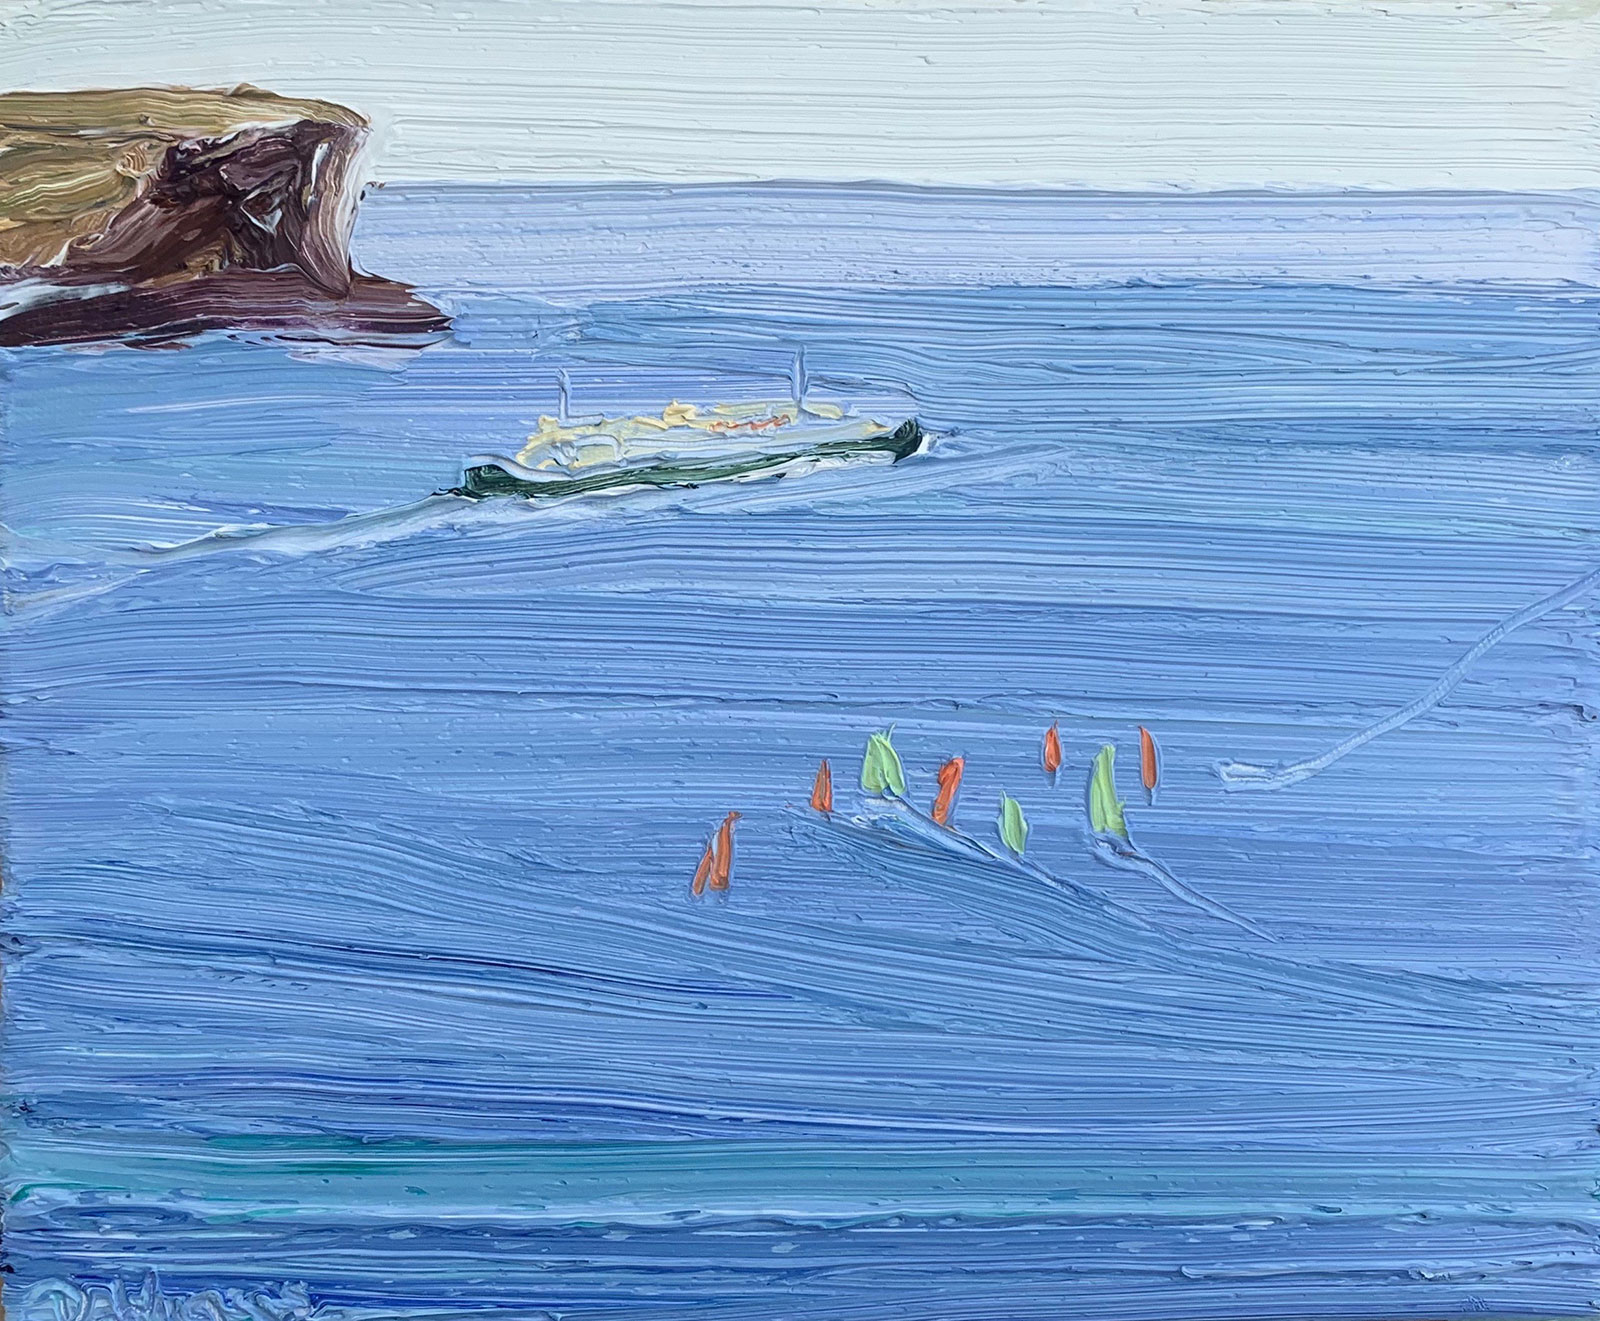 Passing-North-head-and-Balmoral-windsurfing-school-Plein-air-Oil-on-canvas-25cm-x-30cm-David-K-Wiggs-2021